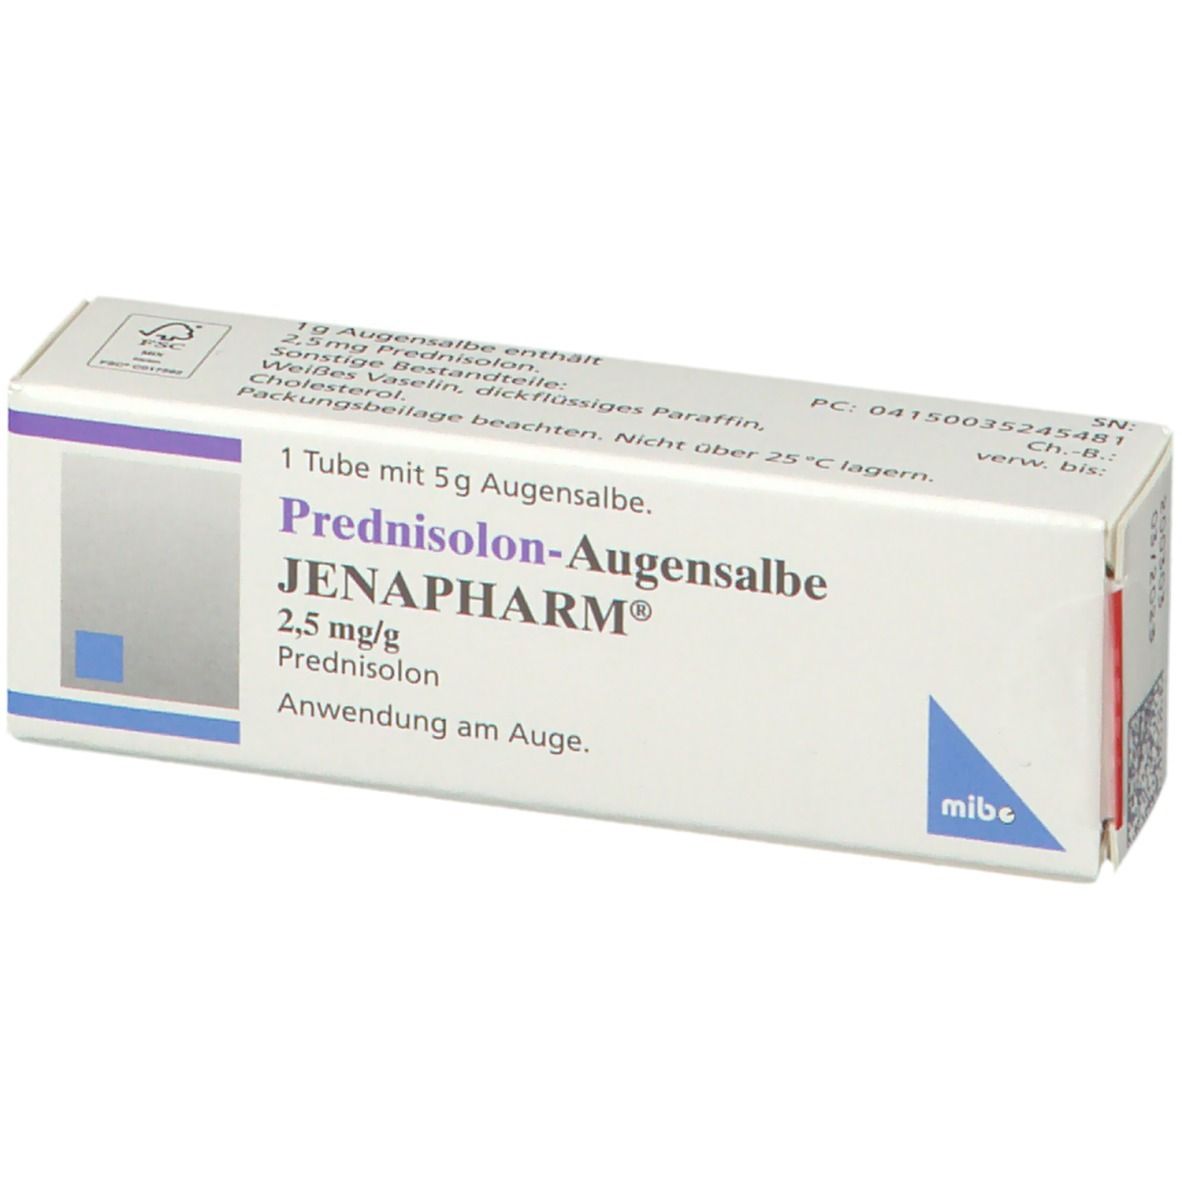 Prednisolon-Augensalbe JENAPHARM®